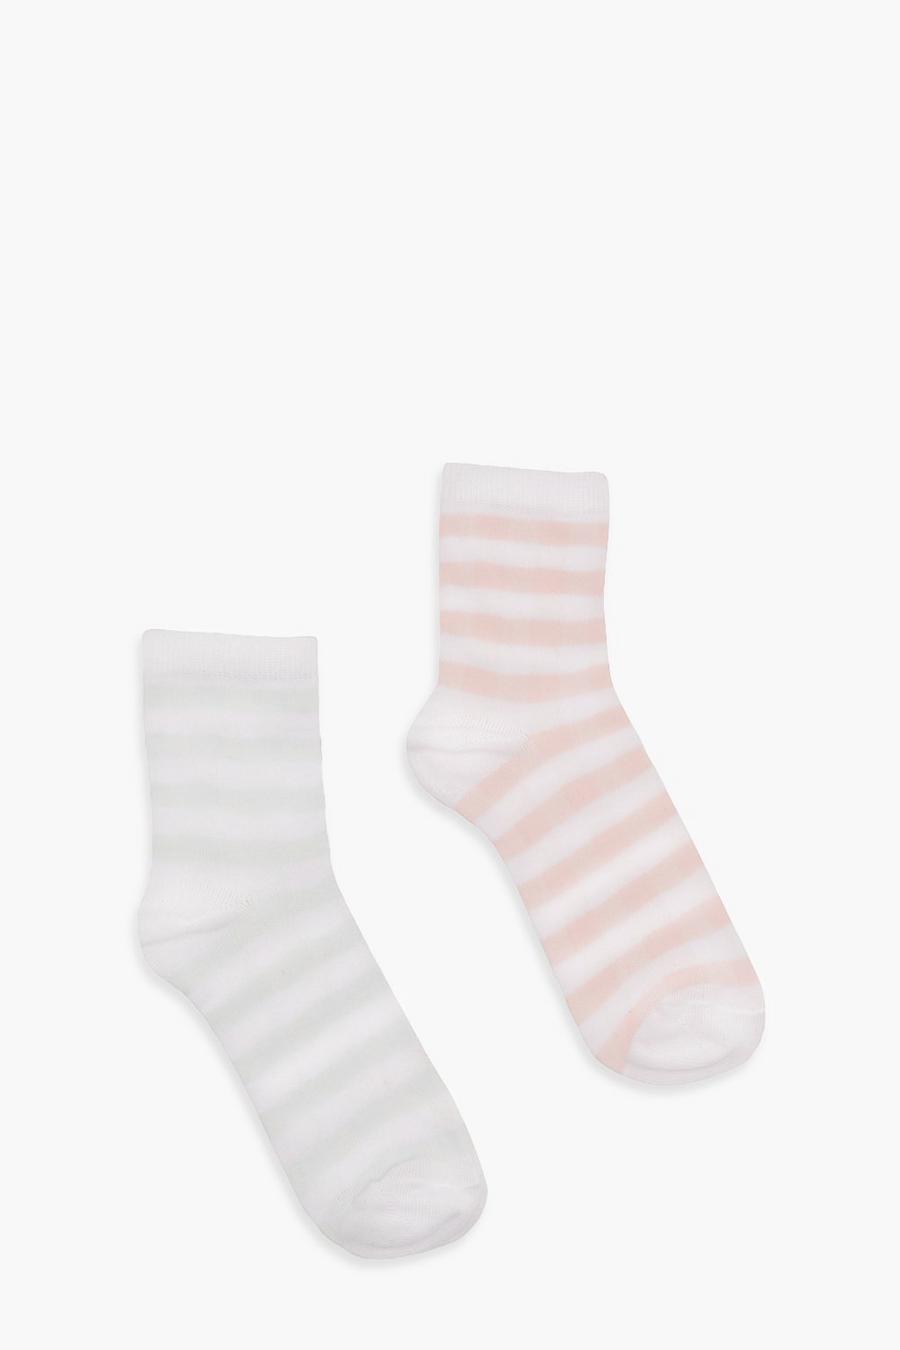 Multi Pastel Striped Socks 2 Pack